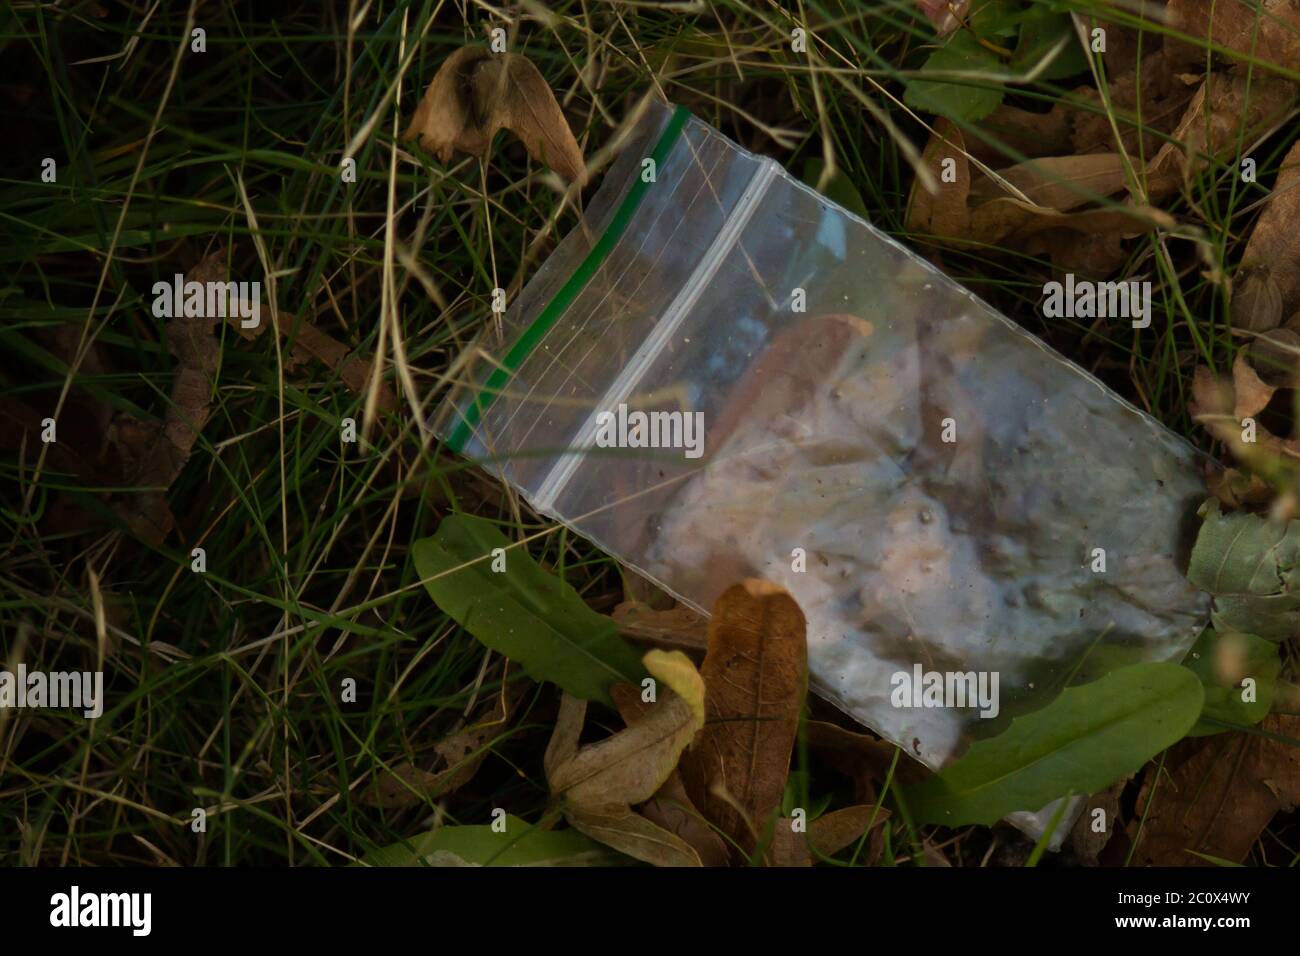 Empty plastic cannabis bag littering the ground Stock Photo